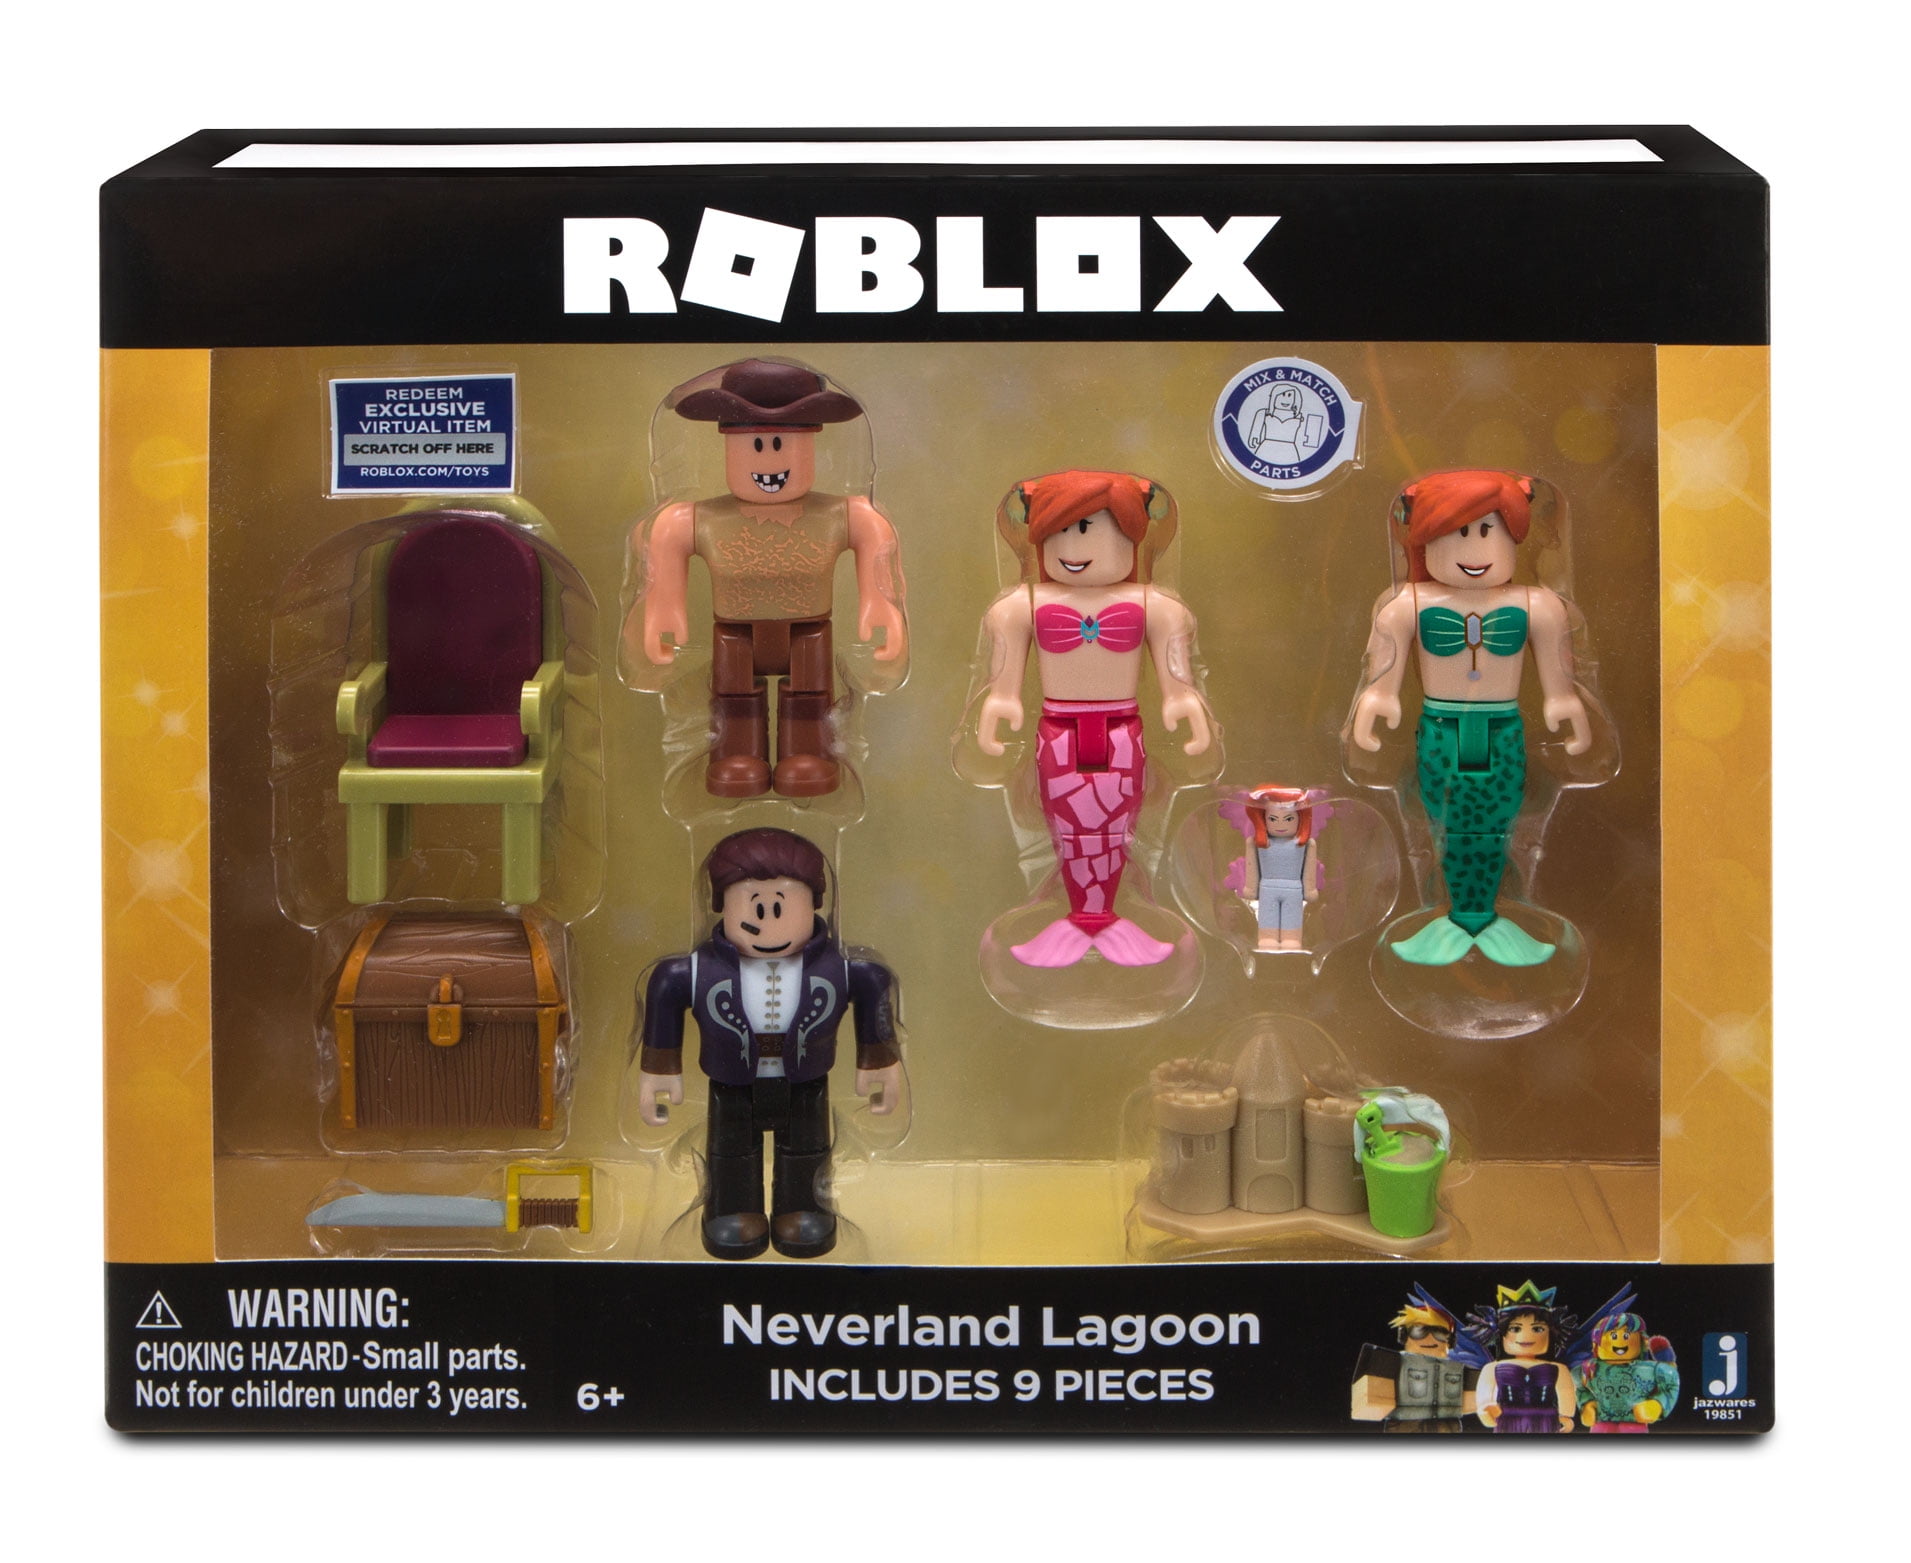 Roblox Celebrity Neverland Lagoon Four Figure Pack Walmart Com - roblox toys royale high code